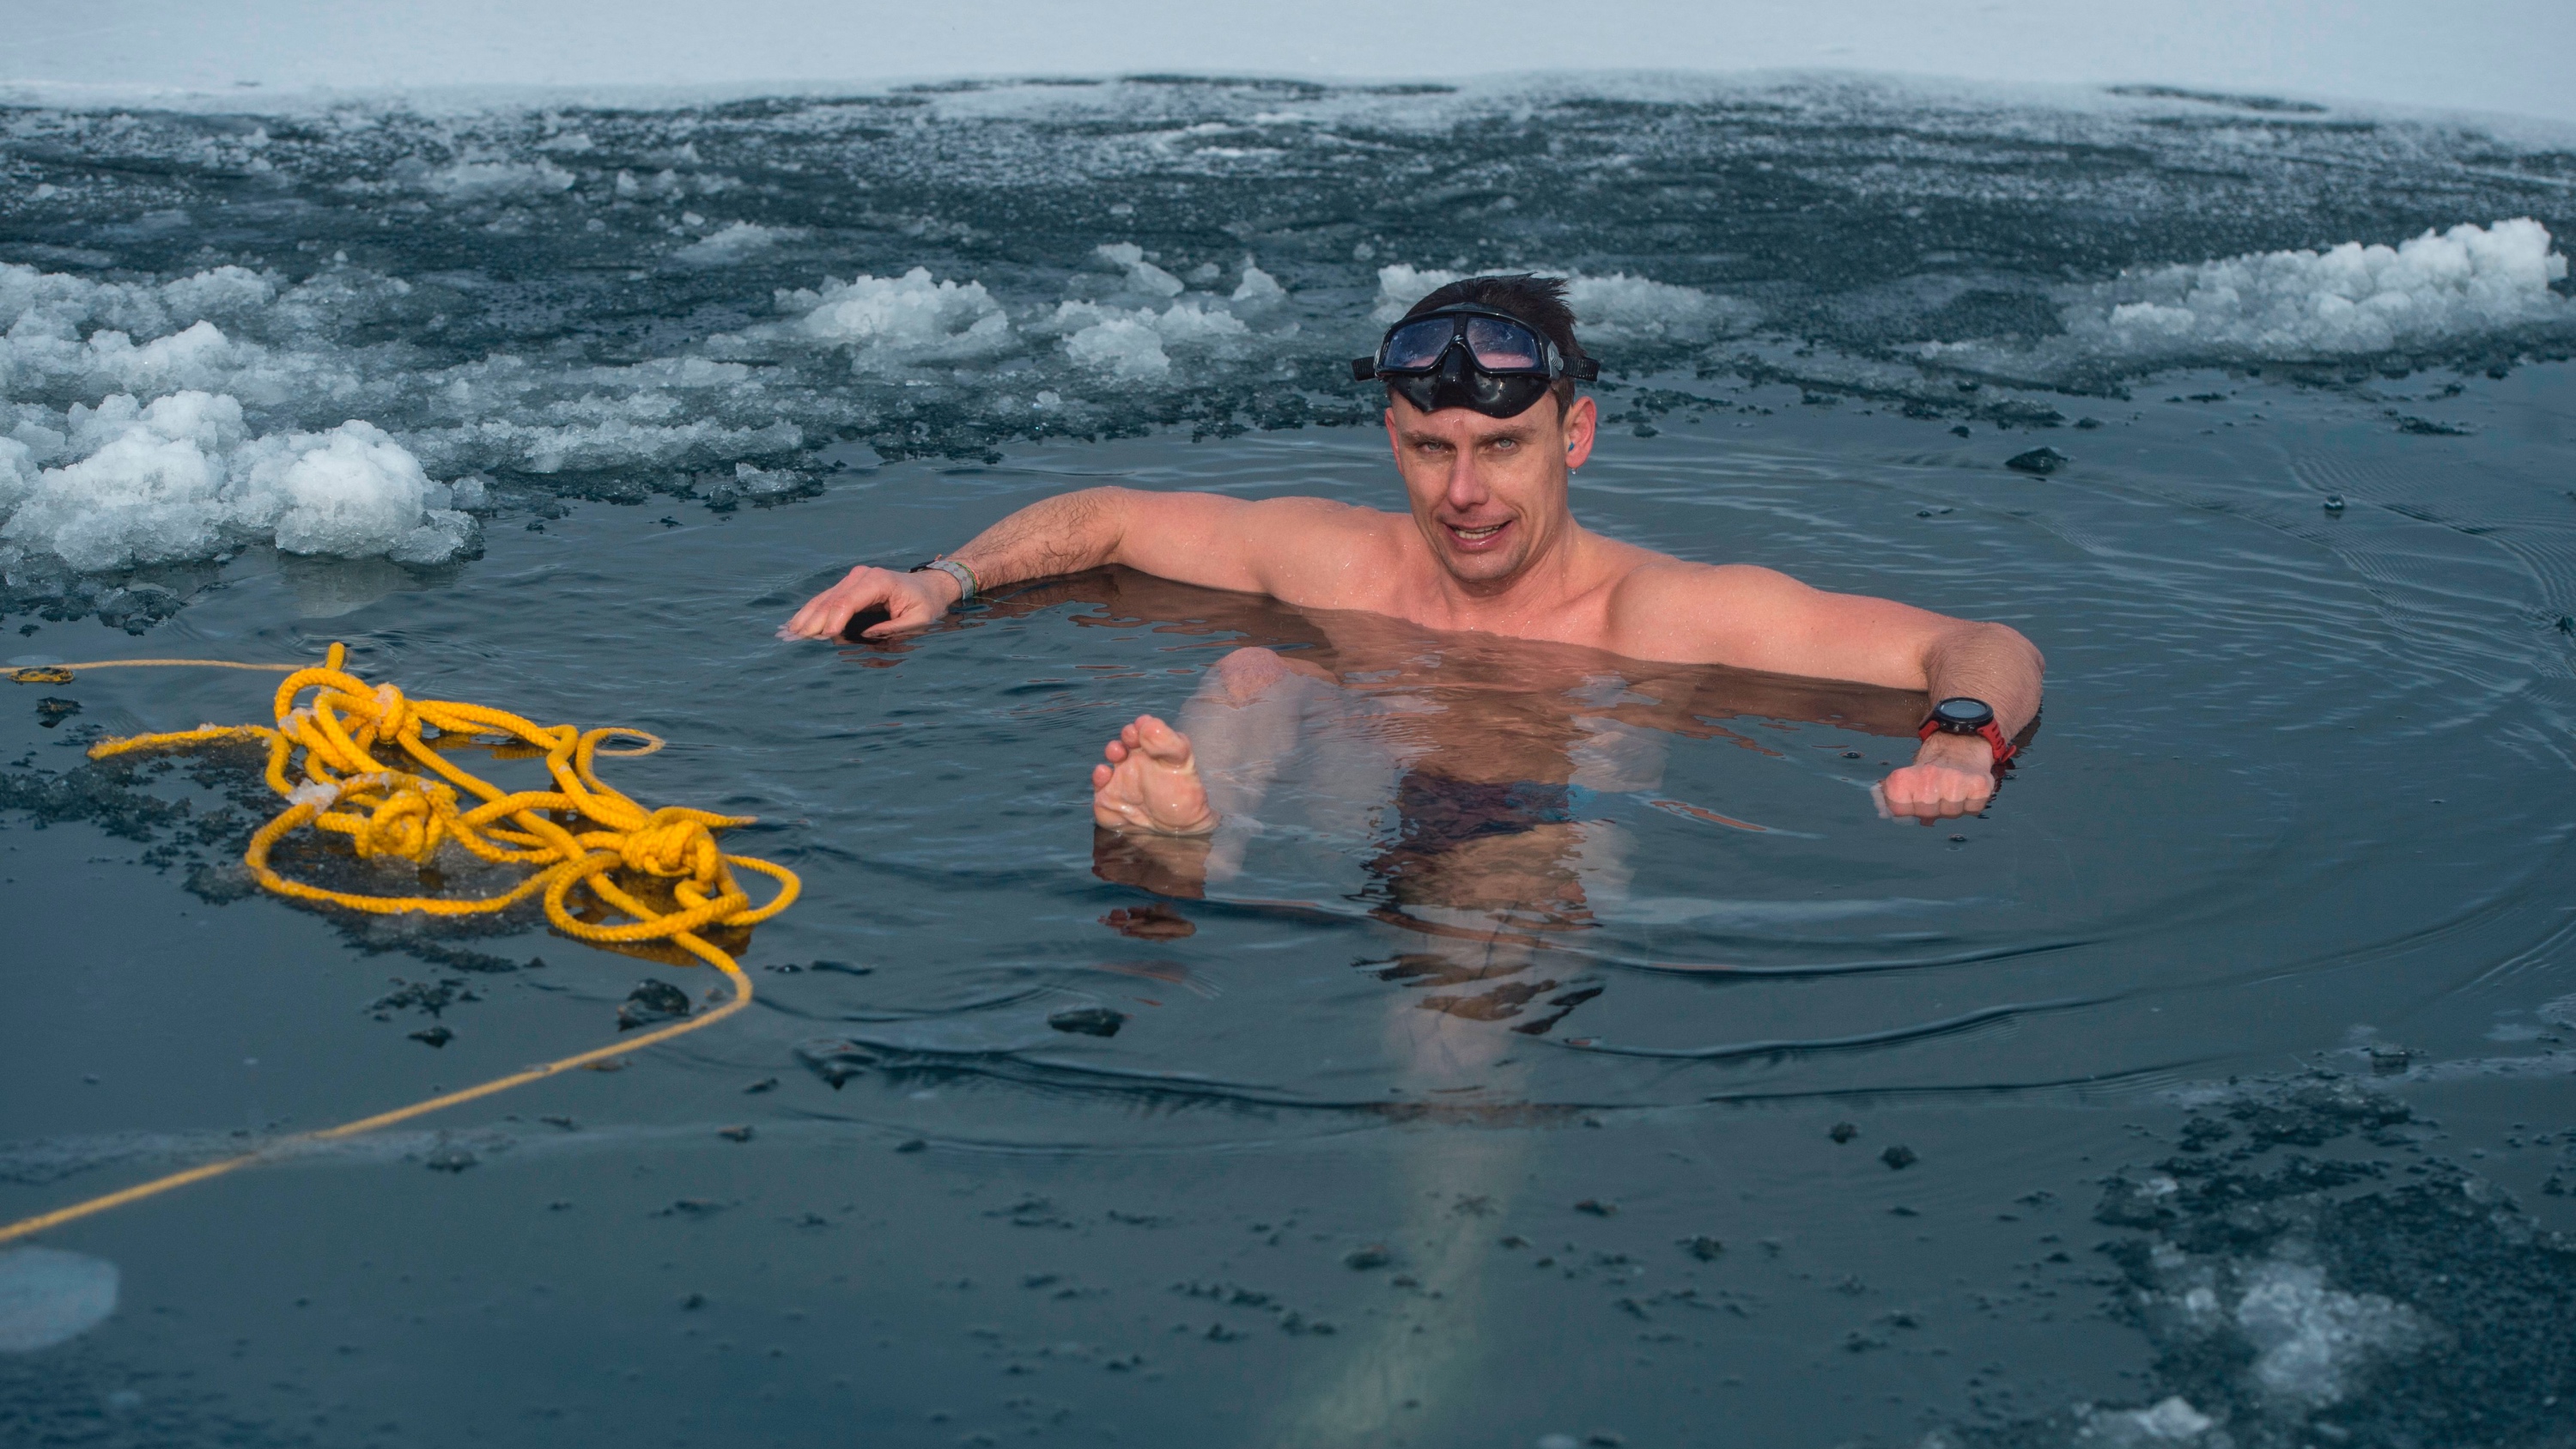 David Vencl free diving record in ice lake